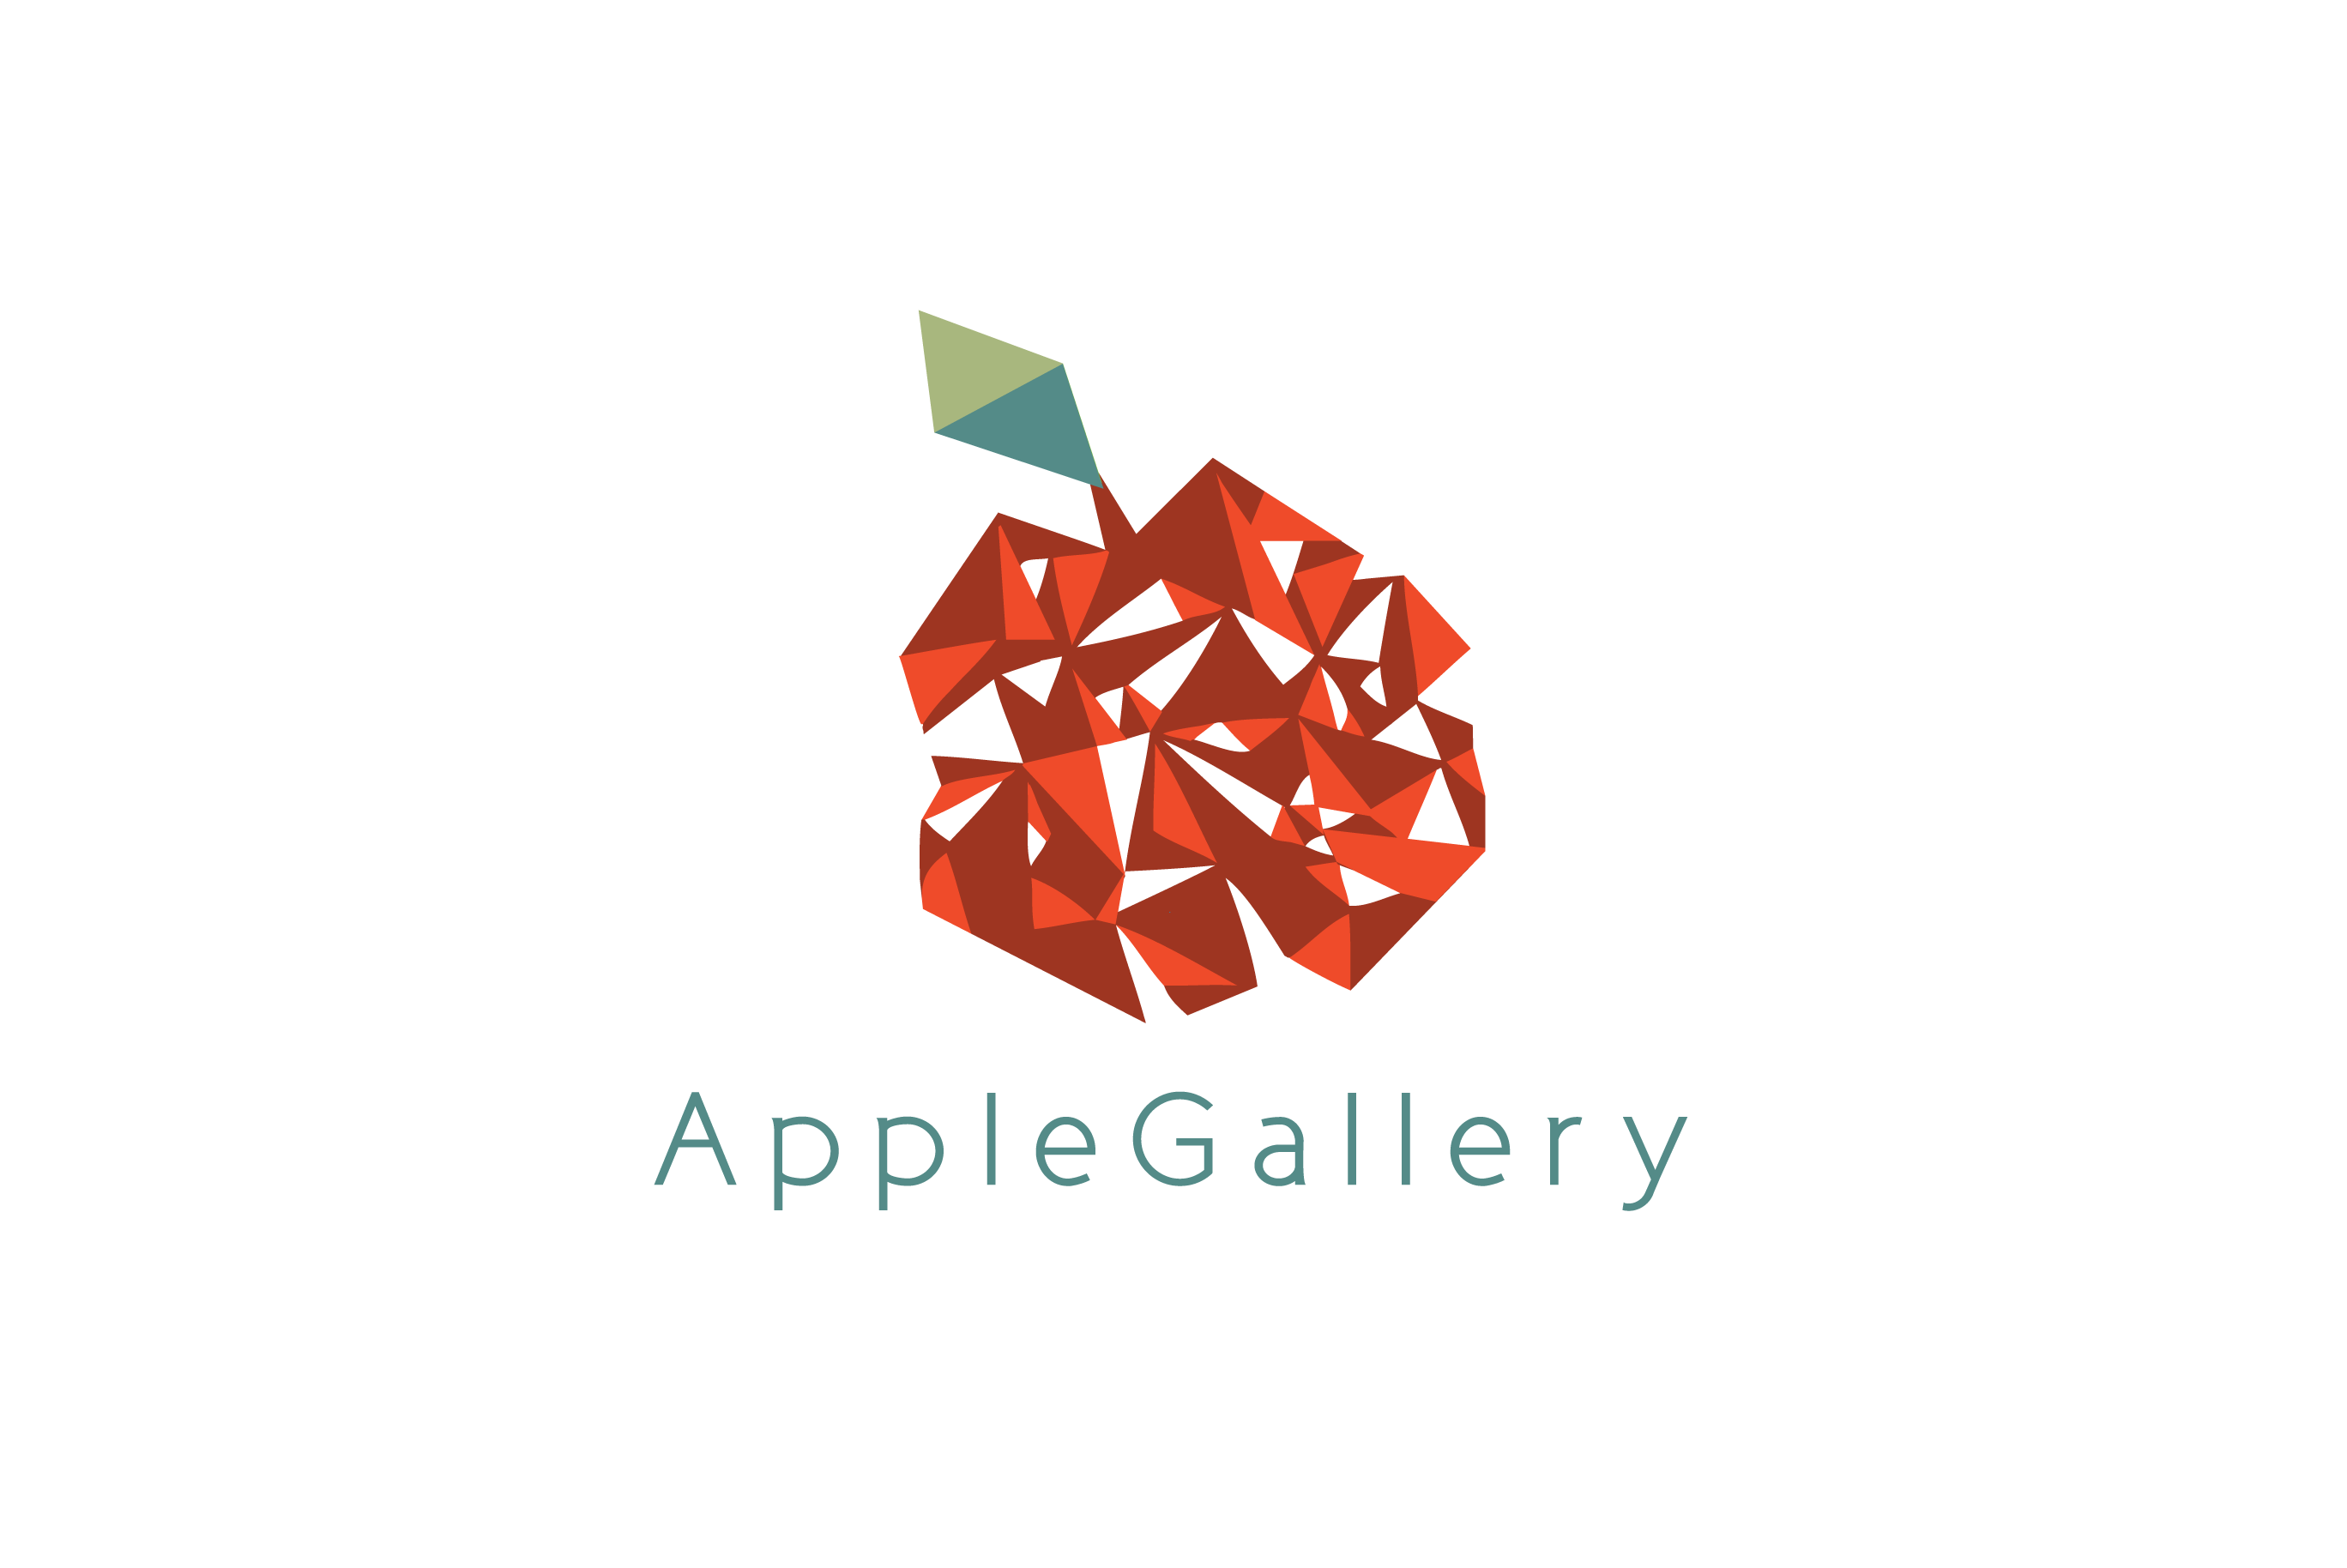 AppleGallery Apple Logo Design.